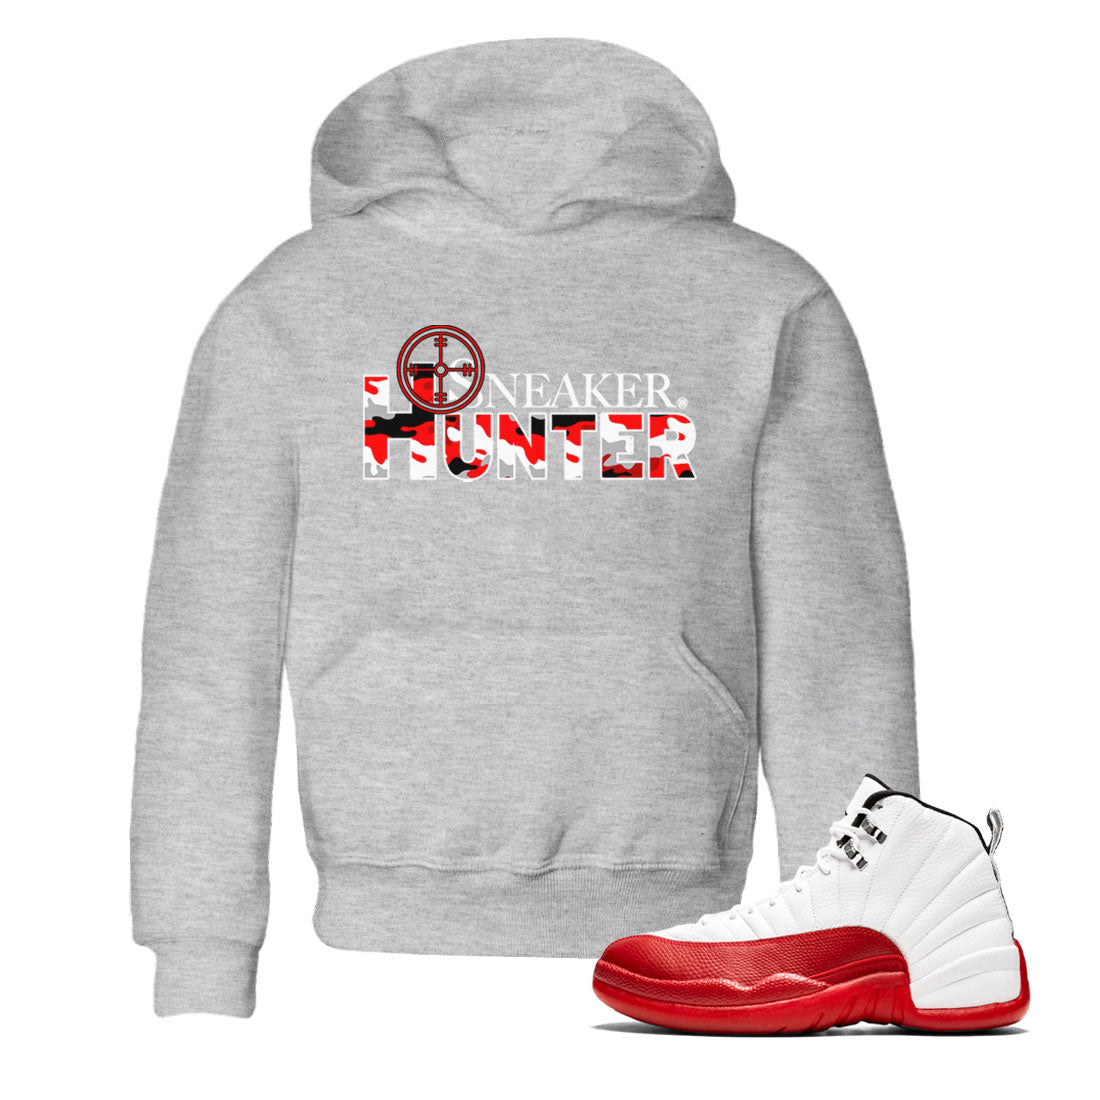 Air Jordan 12 Cherry shirt to match jordans Sneaker Hunter sneaker tees Air Jordan 12 Retro Cherry SNRT Sneaker Release Tees Baby Toddler Heather Grey 1 T-Shirt